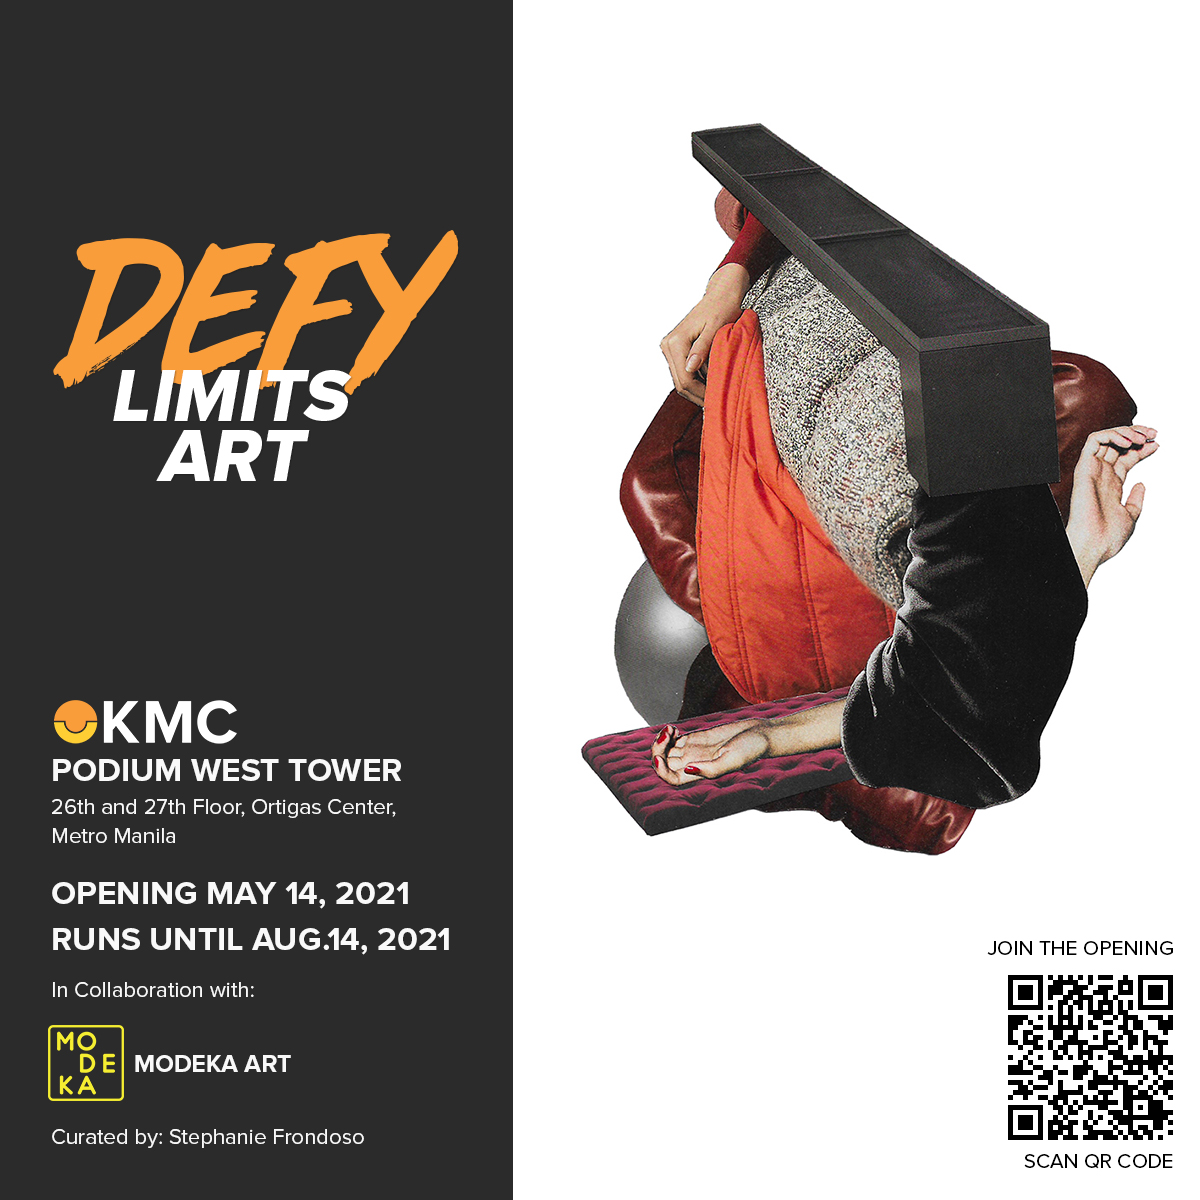 Defy Limits Art at KMC Podium West Tower